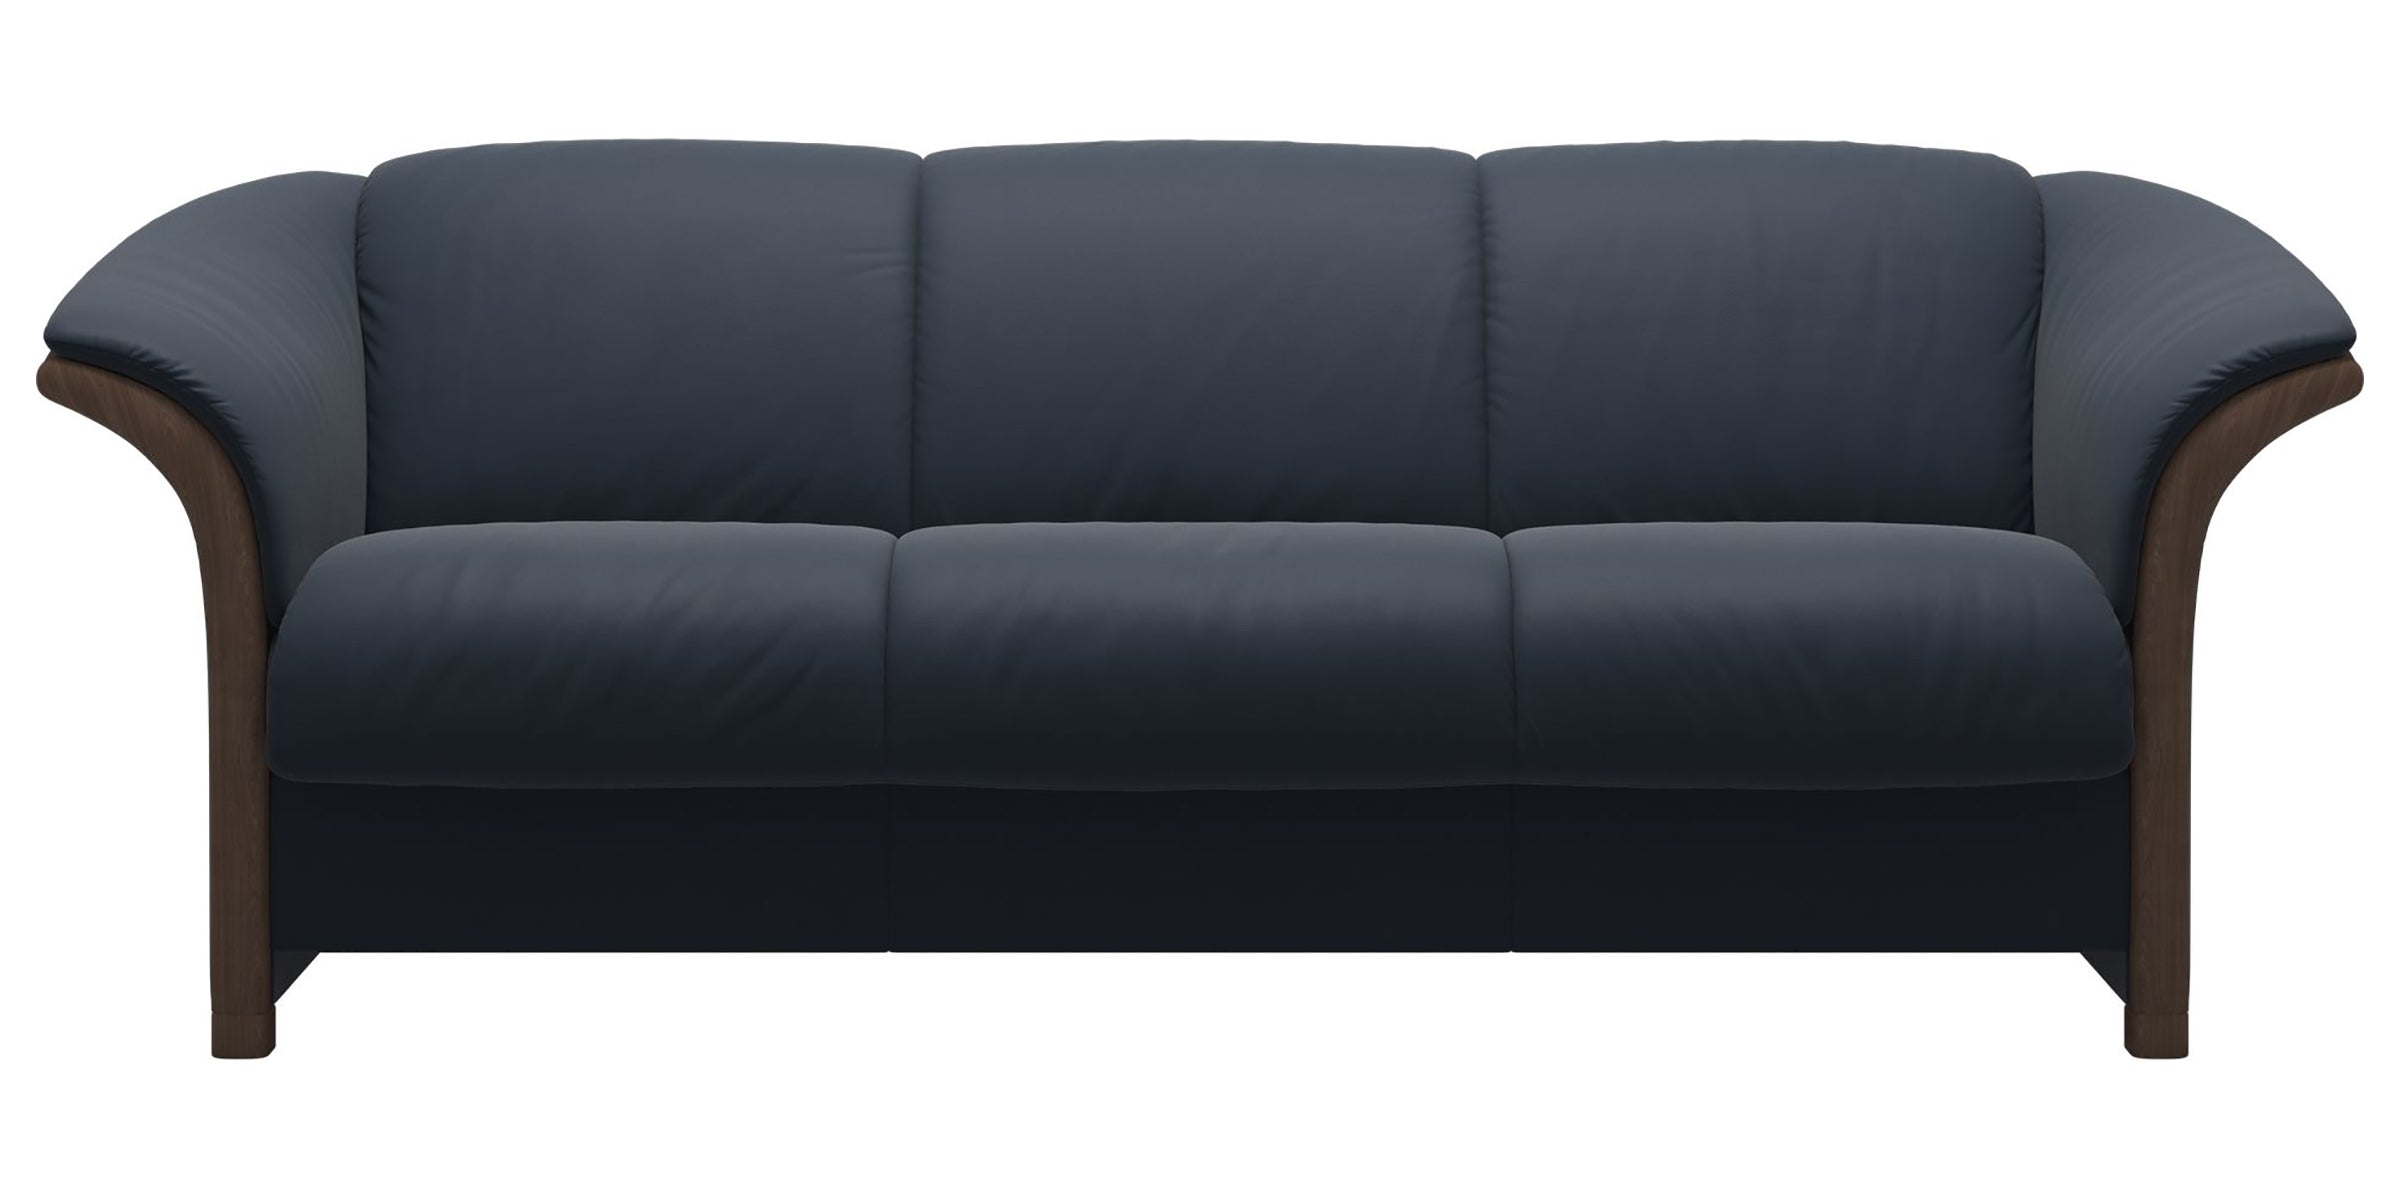 Paloma Leather Oxford Blue and Walnut Arm Trim | Stressless Manhattan Sofa | Valley Ridge Furniture